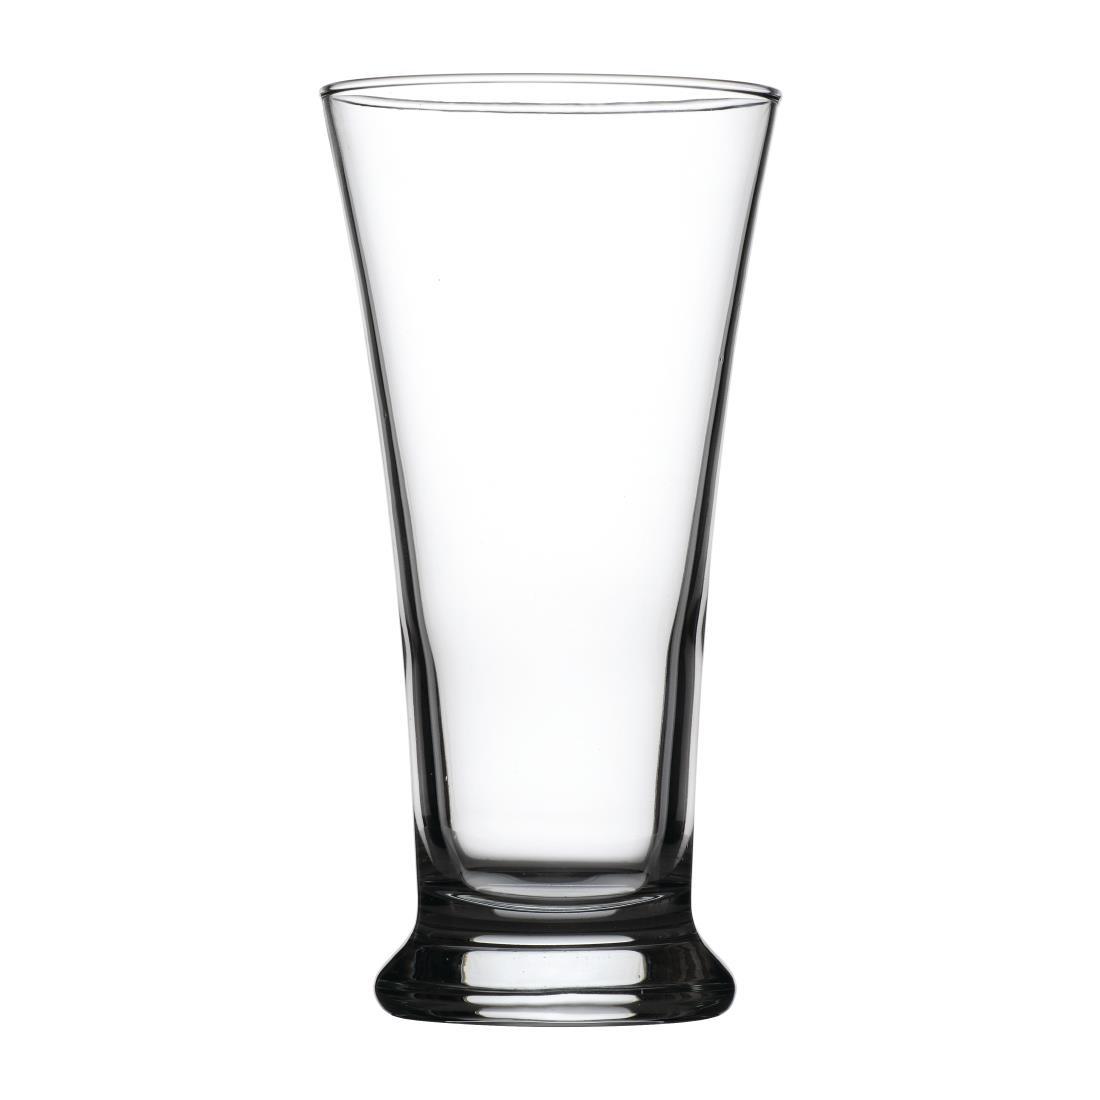 Utopia Europilsner Beer Glasses 280ml CE Marked (Pack of 48) - CW065  - 1